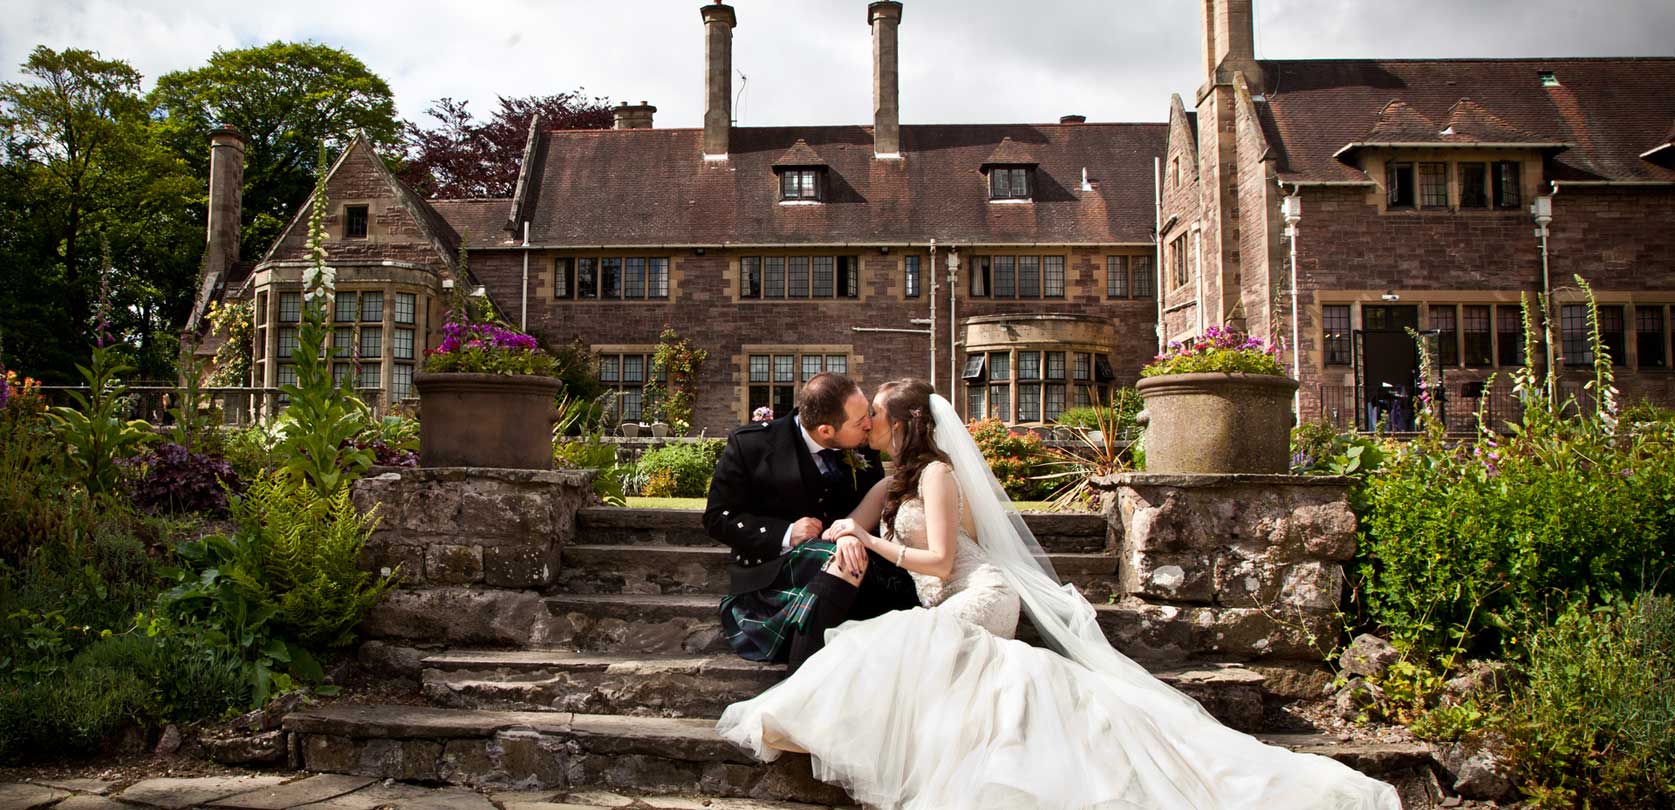 Real Life Wedding photography for Scotland